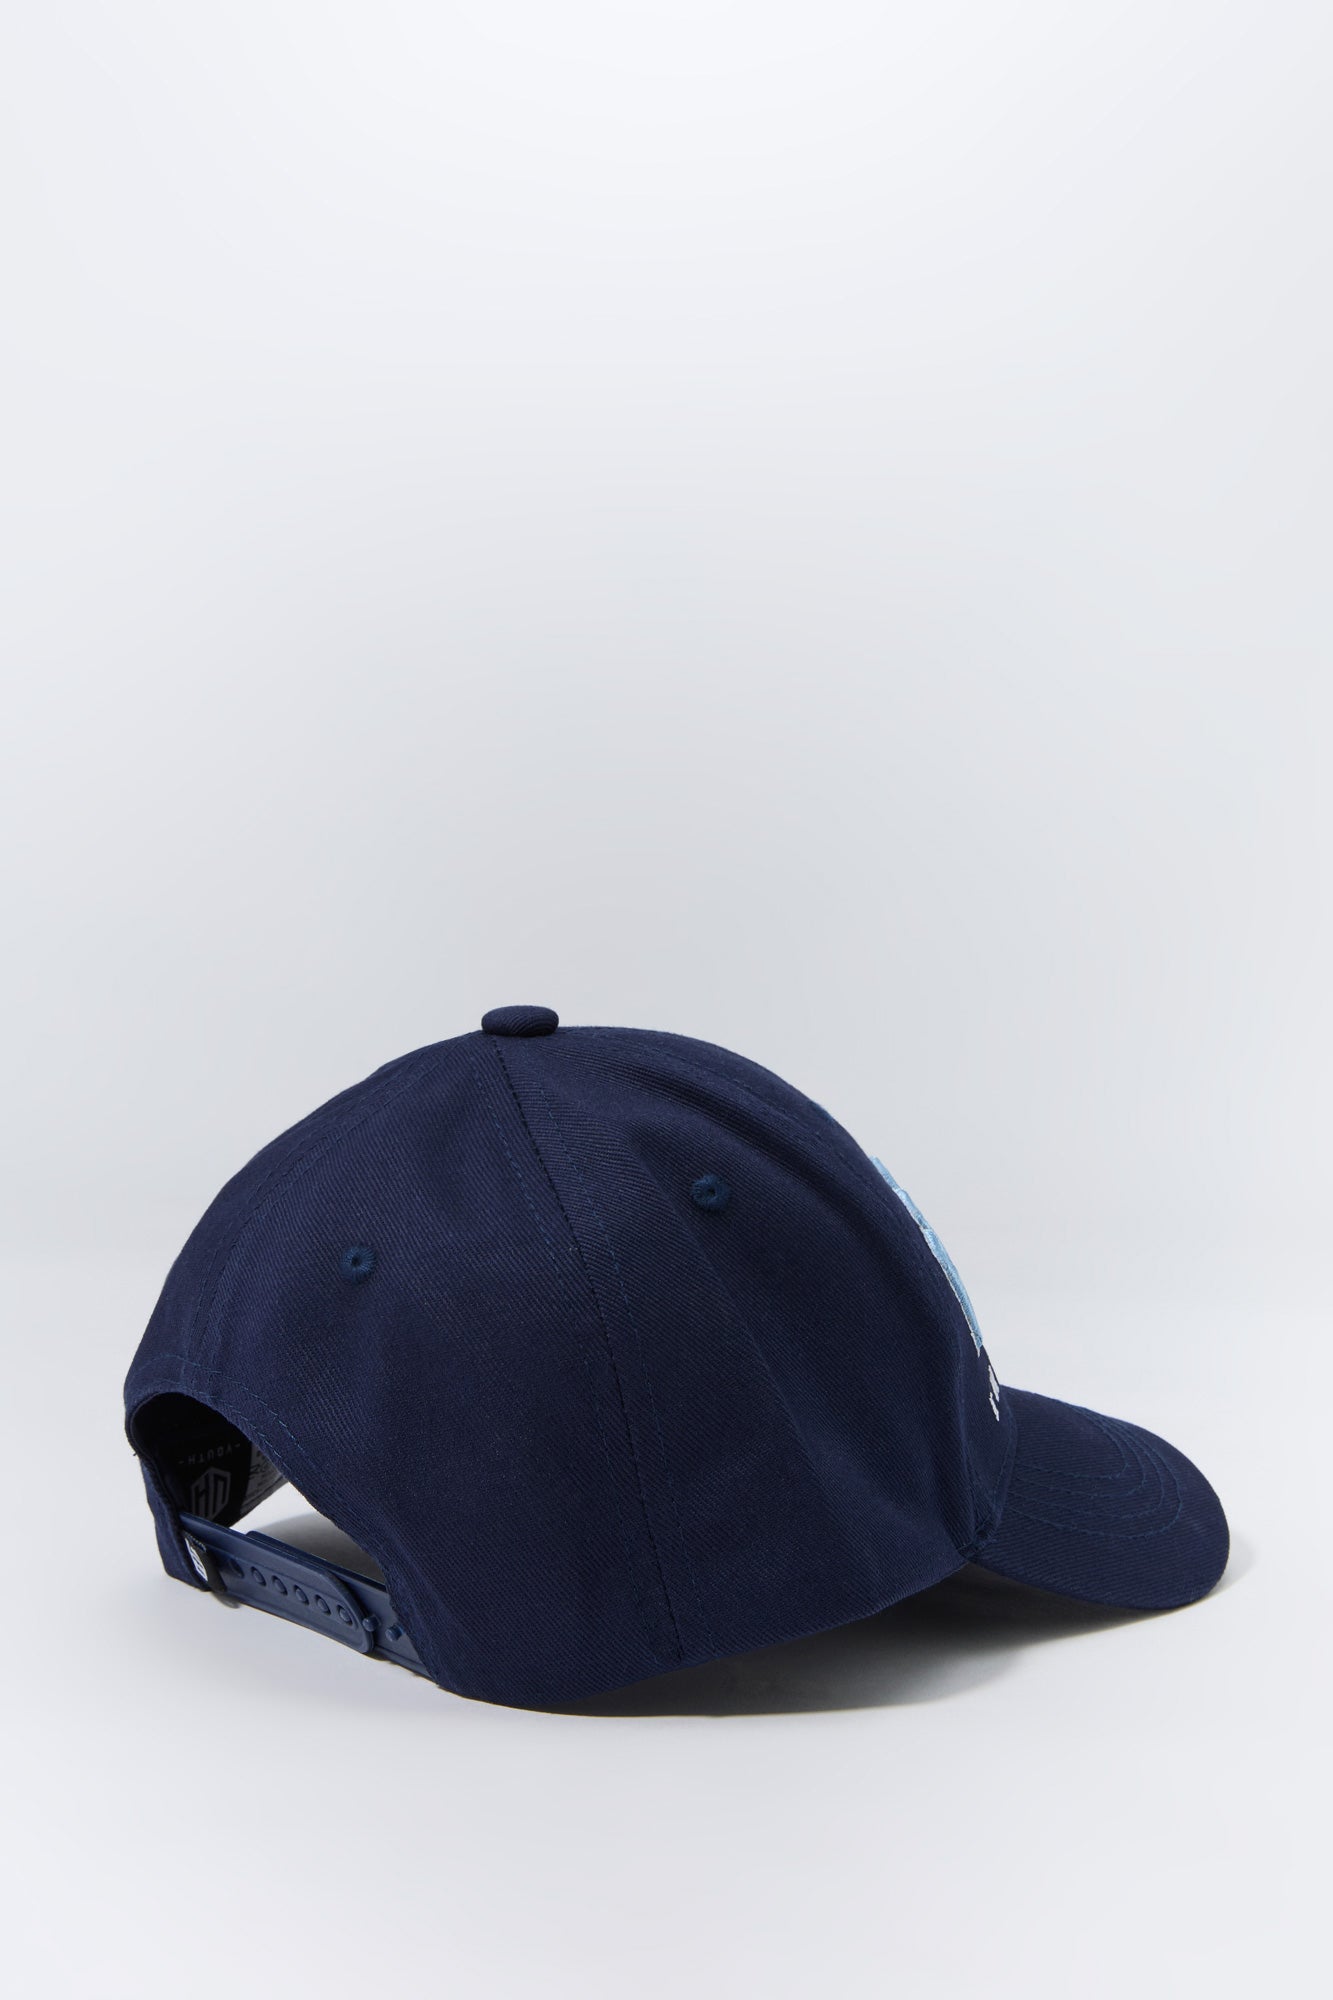 Brooklyn Embroidered Baseball Hat